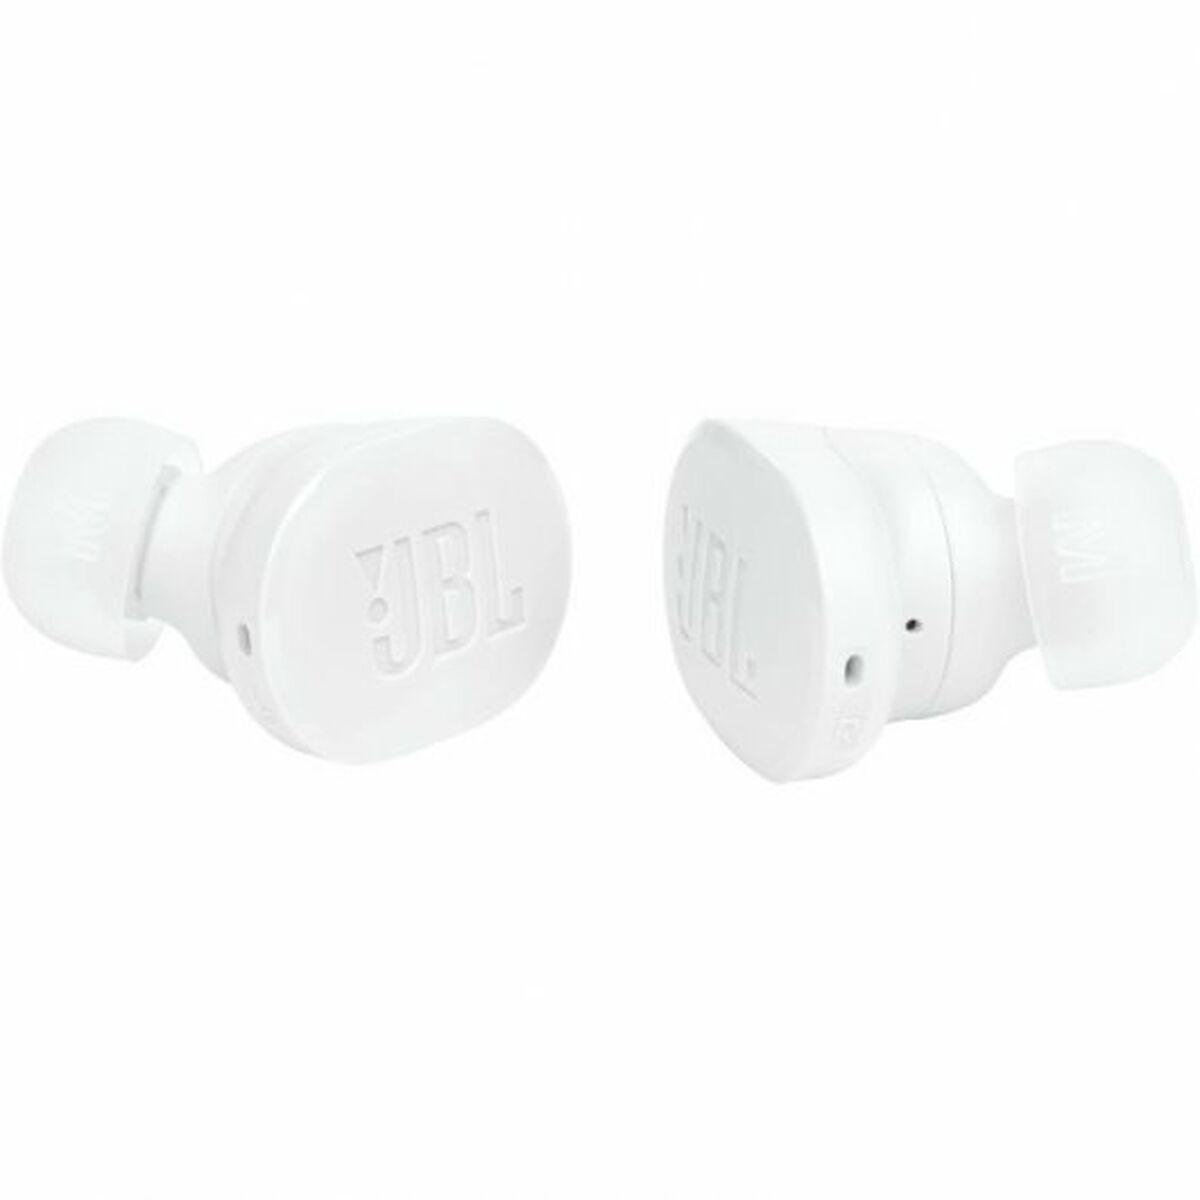 Kaufe Kopfhörer mit Mikrofon JBL Tune BStk. Weiß bei AWK Flagship um € 125.00